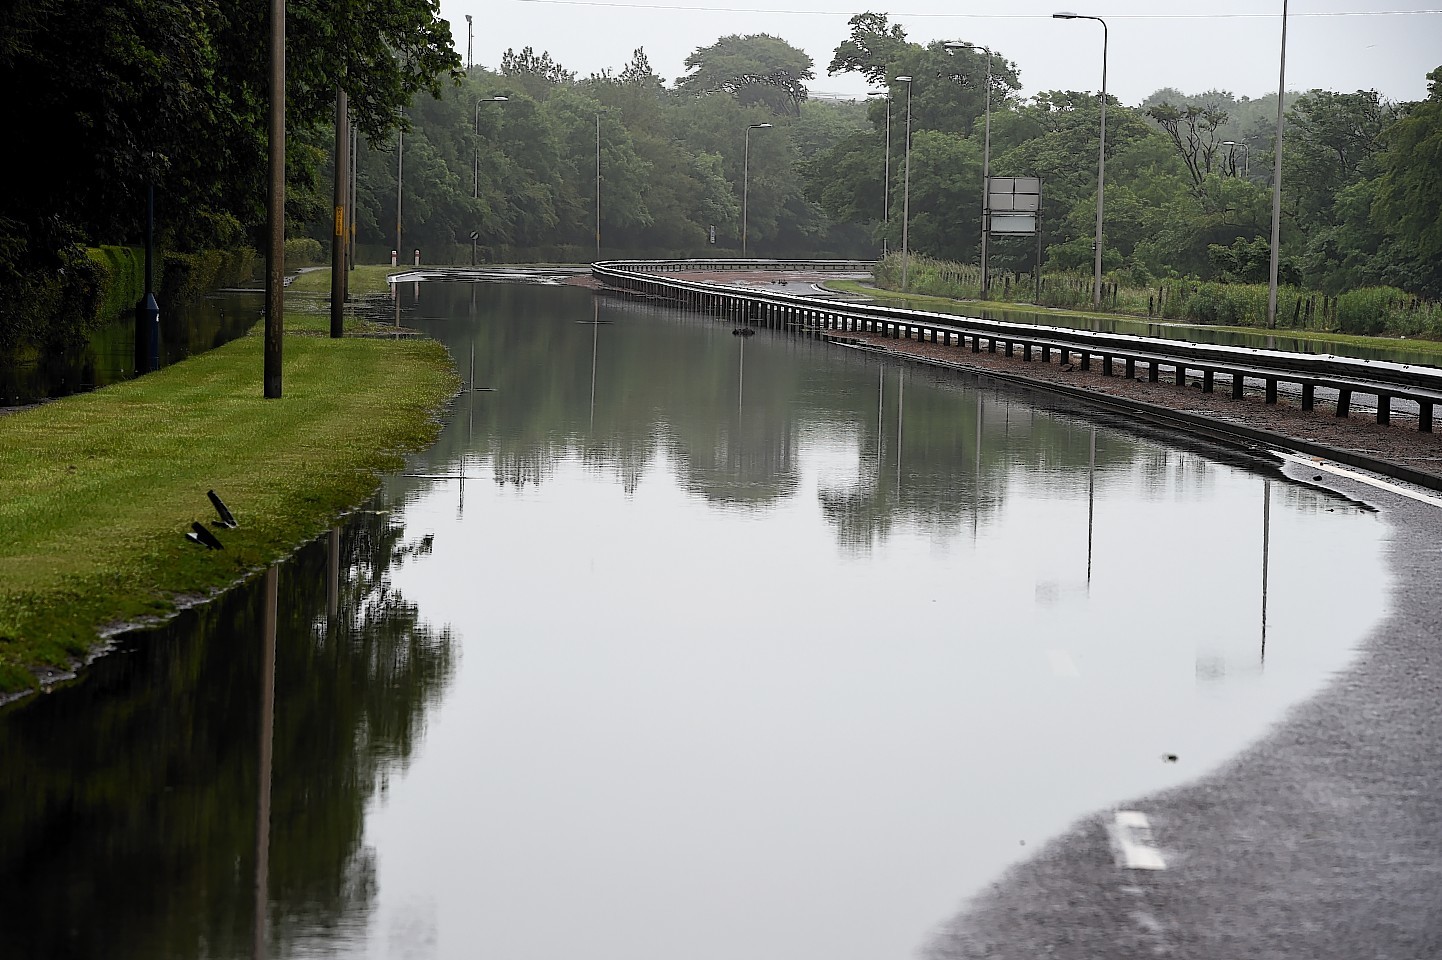 A90 closure due to flooding